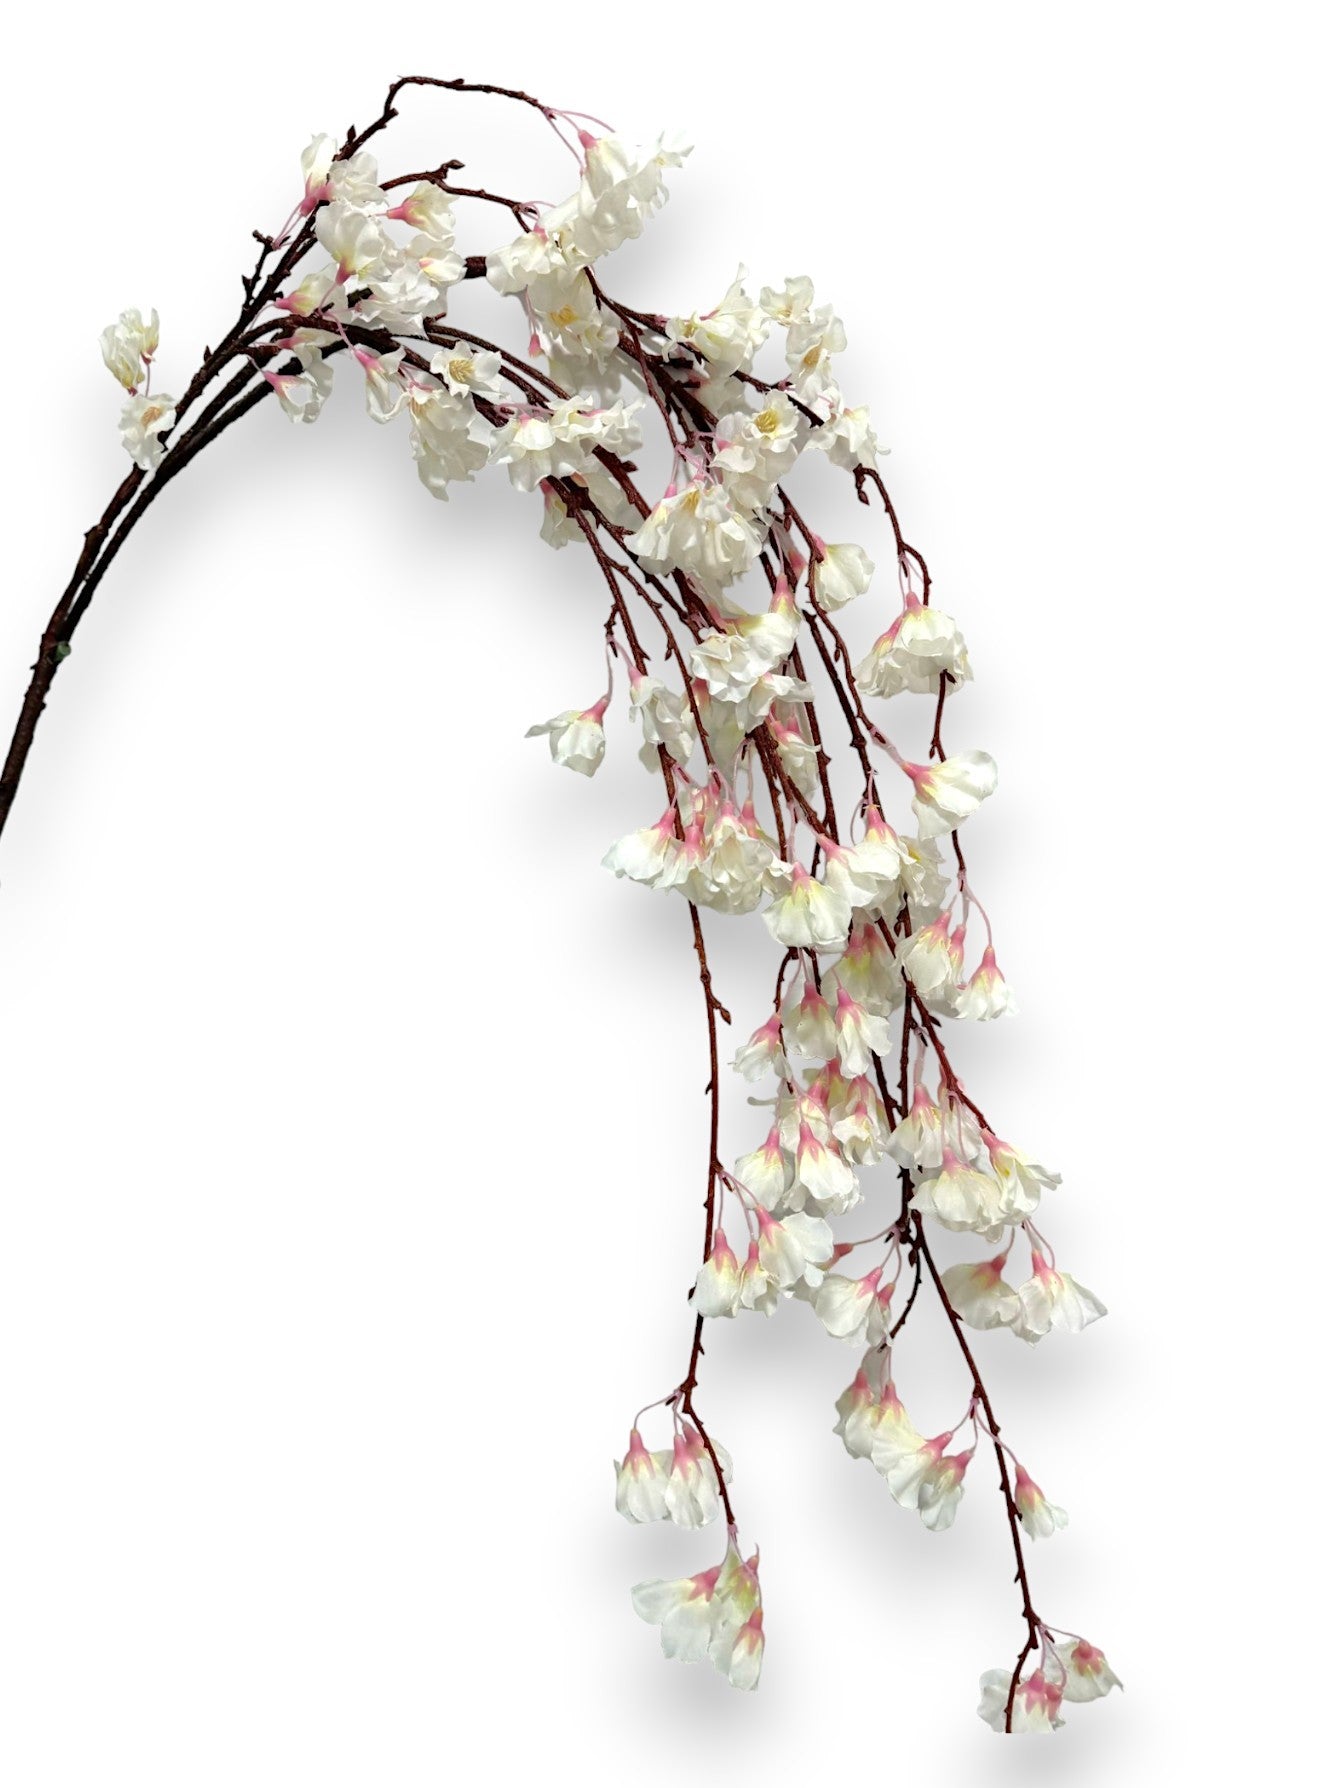 Hanging Cherry Blossom